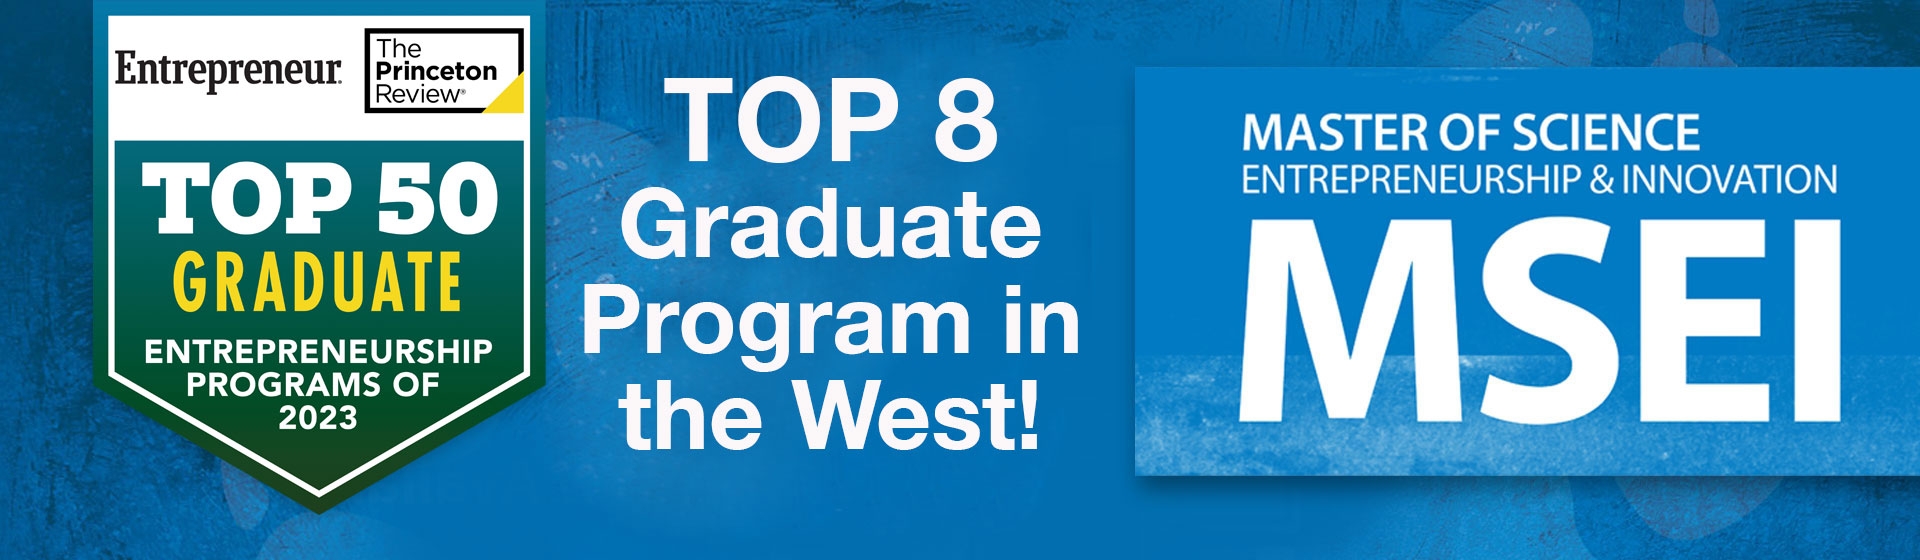 Top 8 Graduate Program in the West